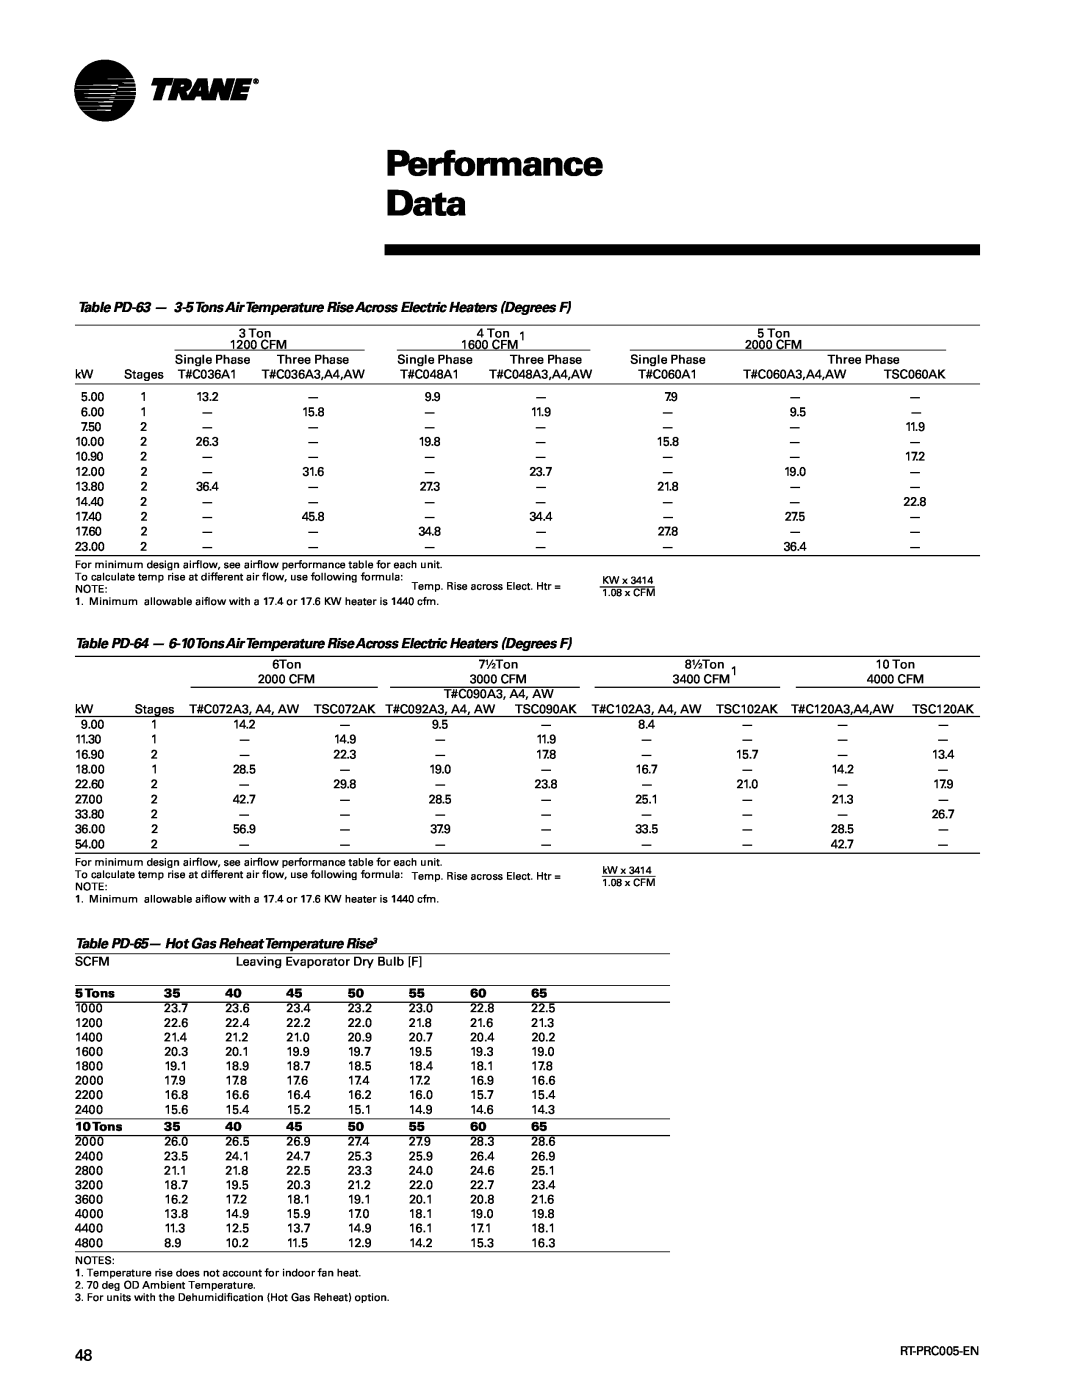 Trane RT-PRC005 manual Performance Data, Table PD-65-Hot Gas ReheatTemperature Rise3 